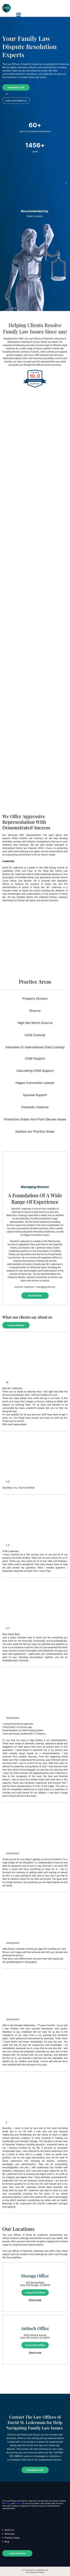 Law Offices of David M. Lederman - Walnut Creek CA Lawyers